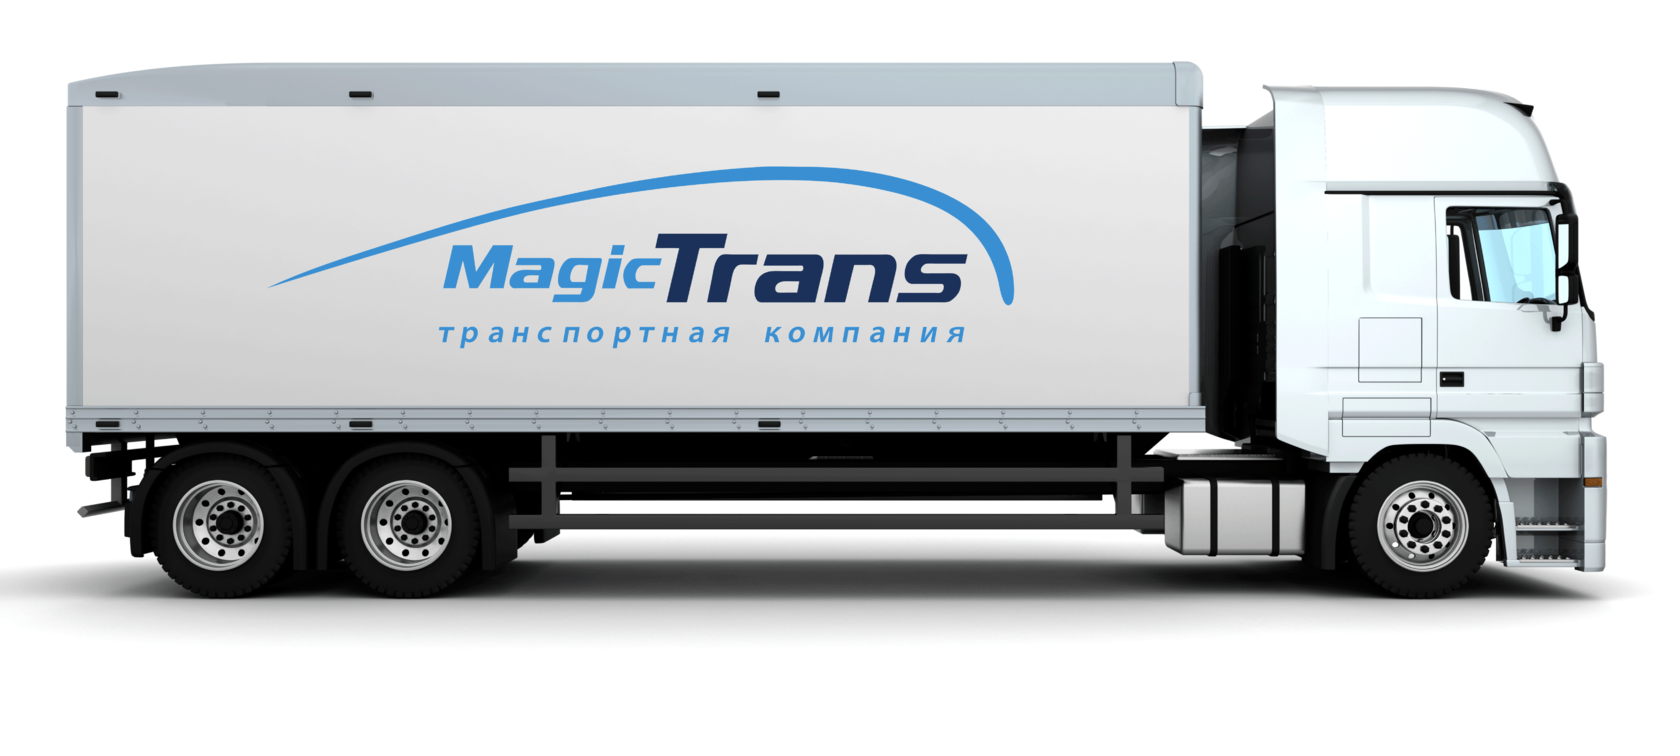 Мейджик транс транспортная компания. Мейджик транс транспортная компания лого. ТК Мейджик транс логотип. Фуры компании Magic Trans. Компания magic trans